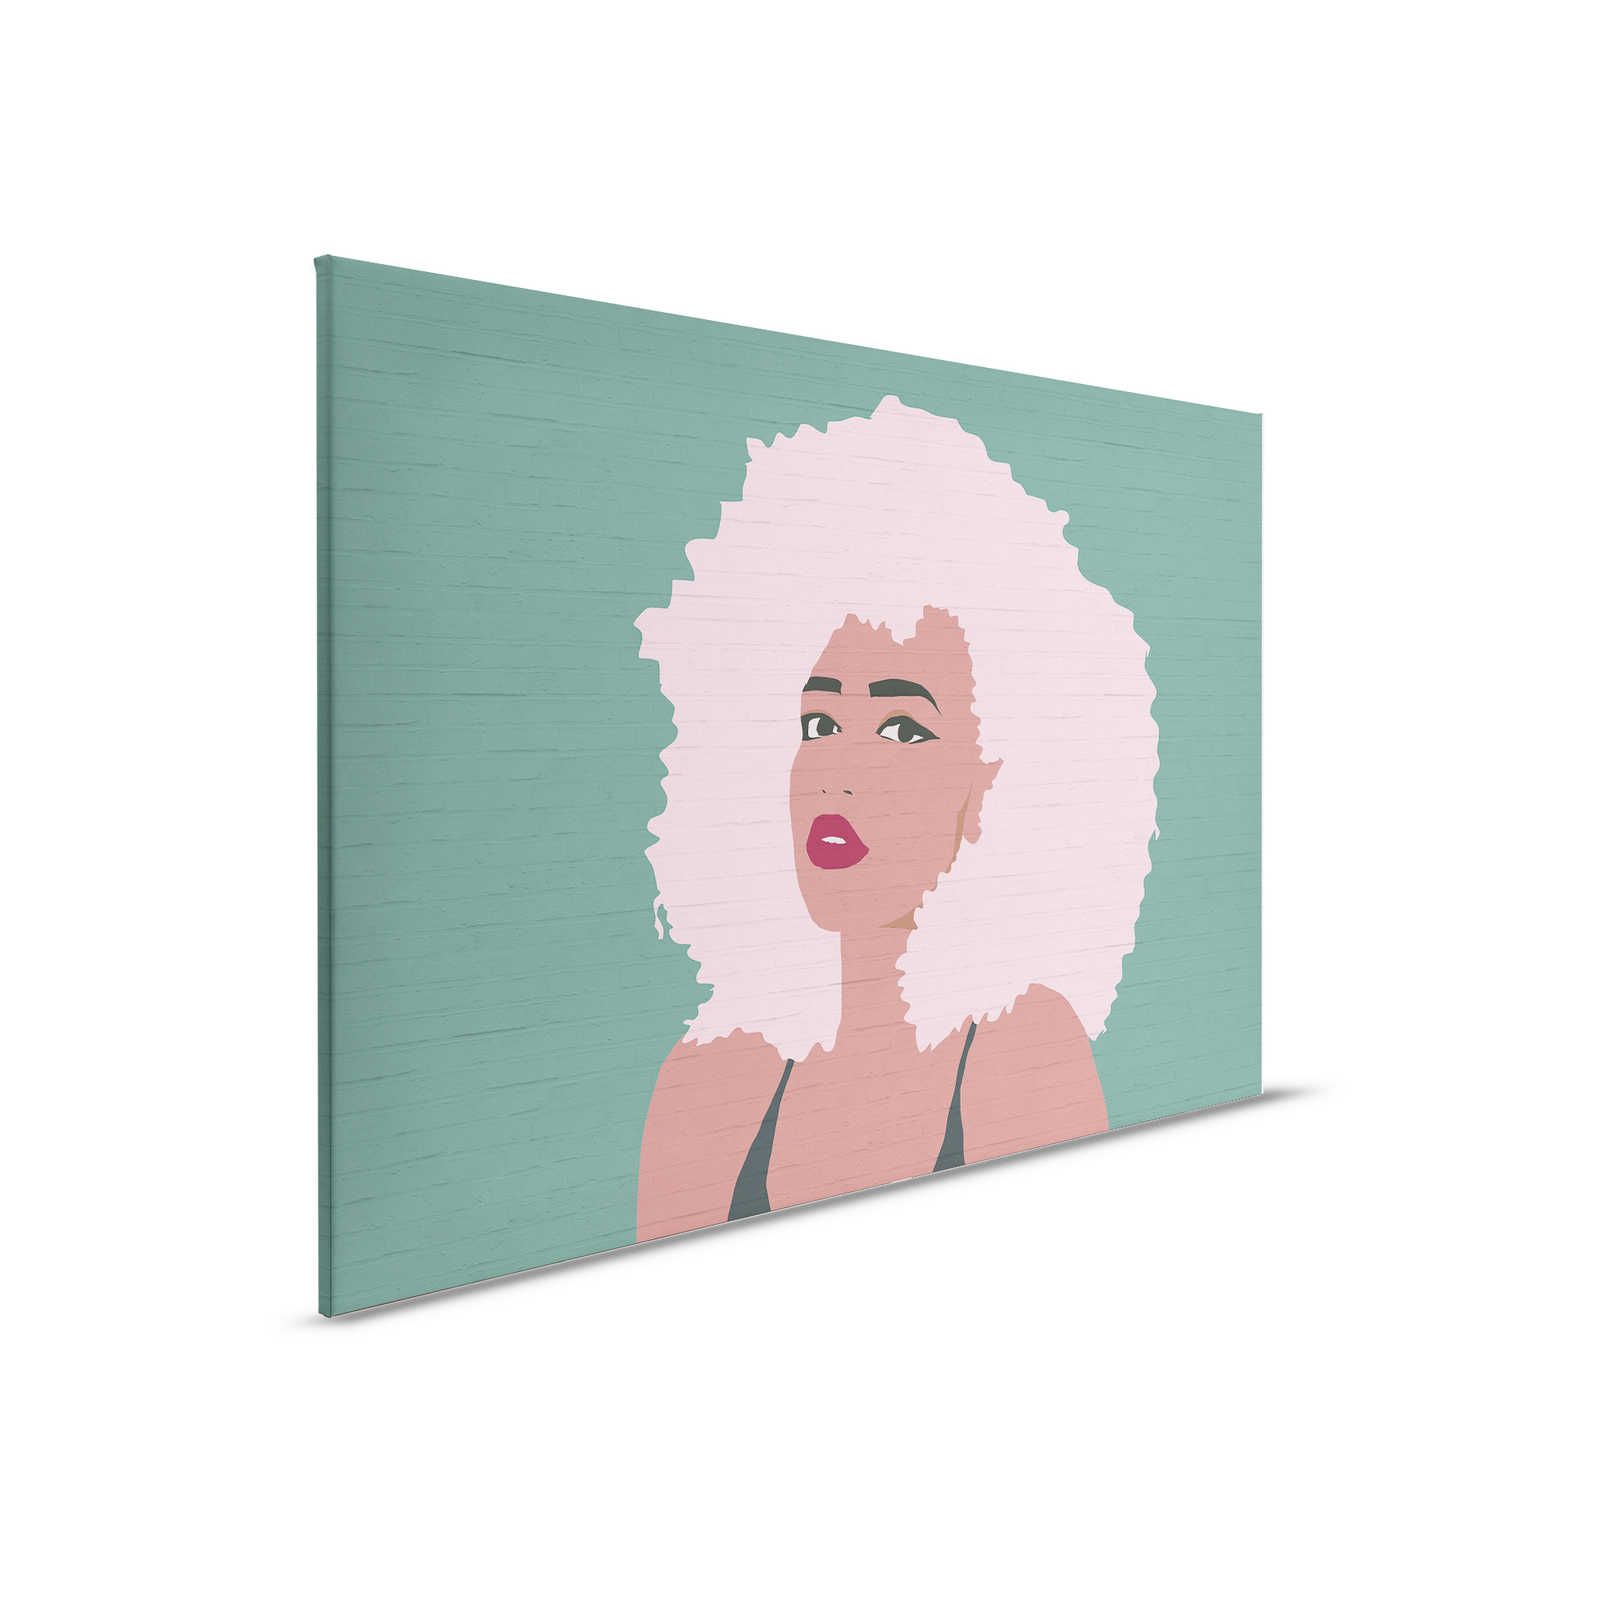         Frauen Leinwandbild Whitney im Colour Block Stil – 0,90 m x 0,60 m
    